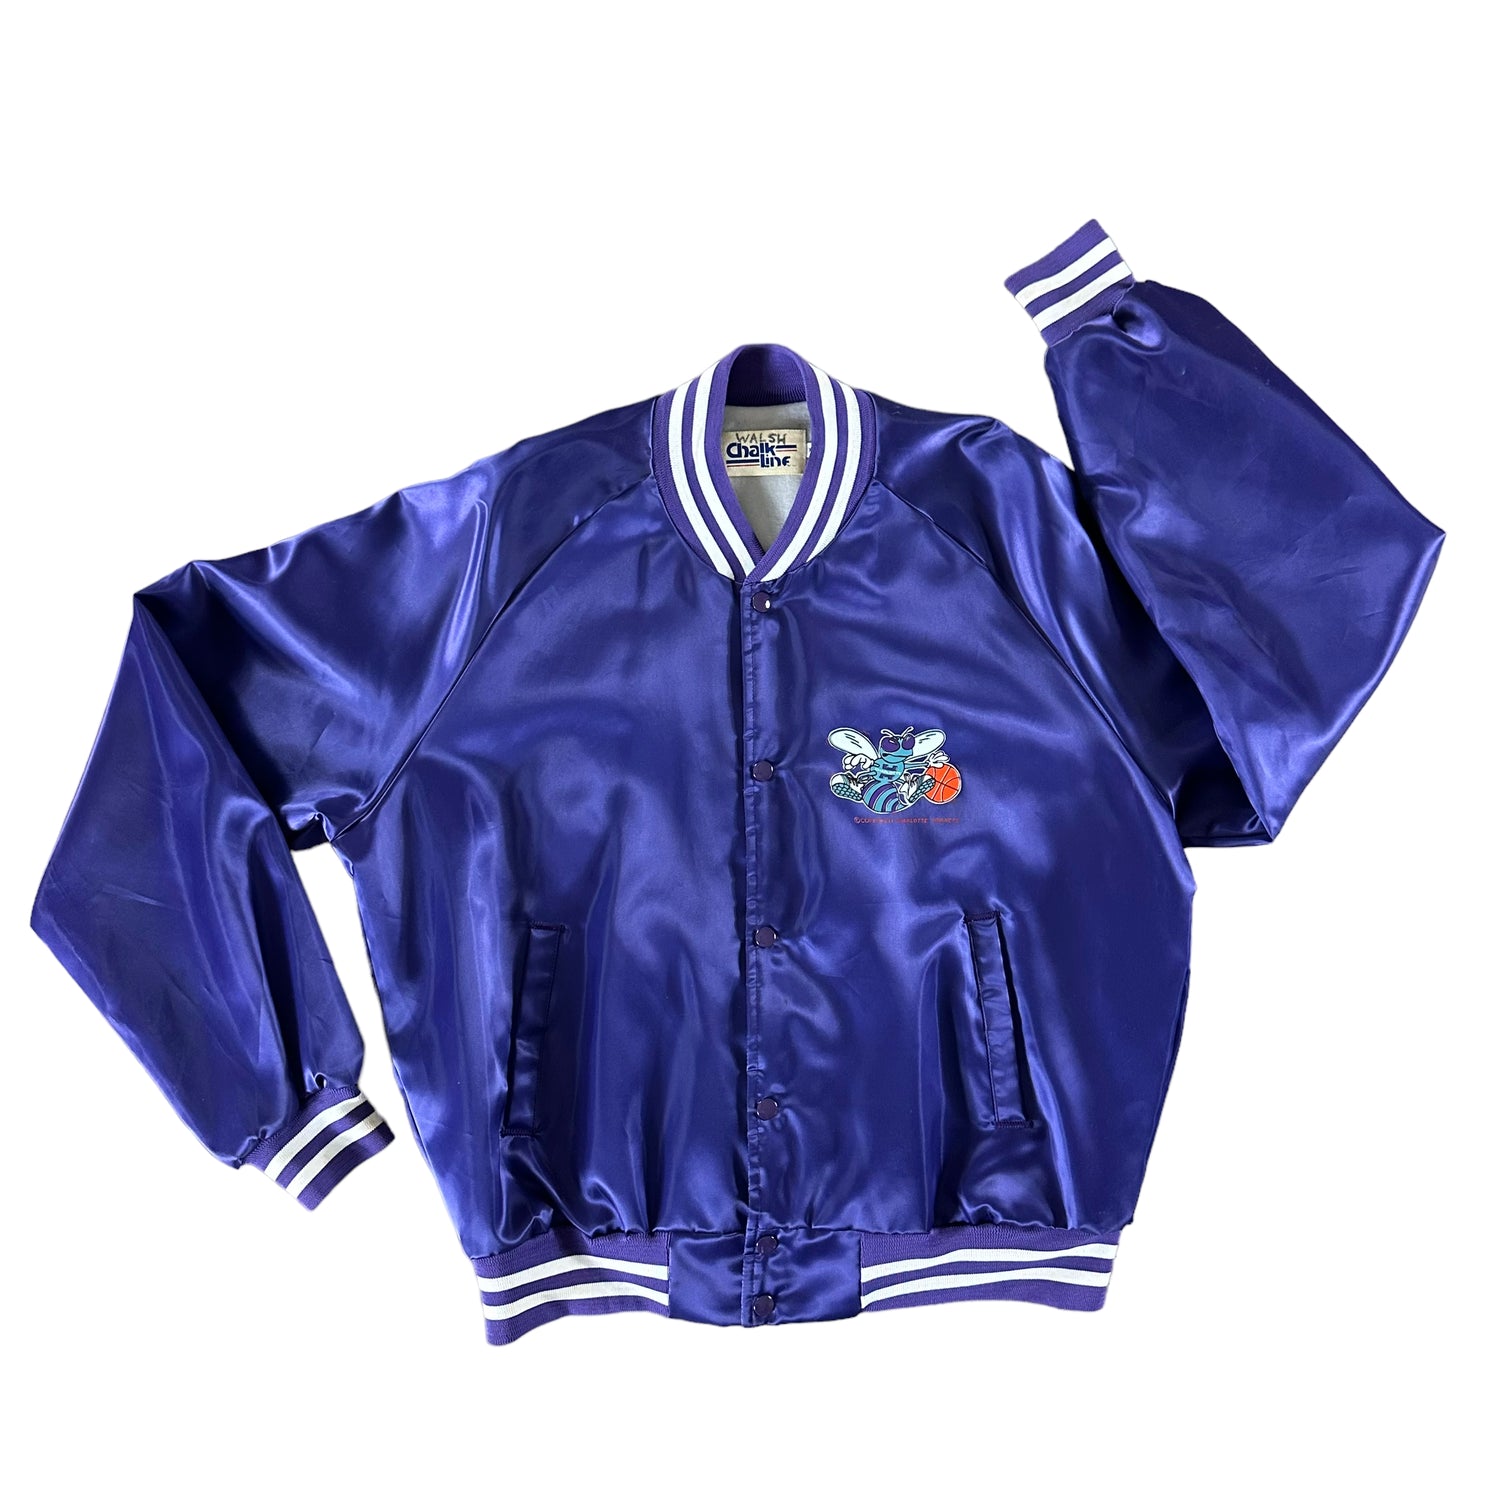 Vintage 1980s Charlotte Hornets Jacket size XL